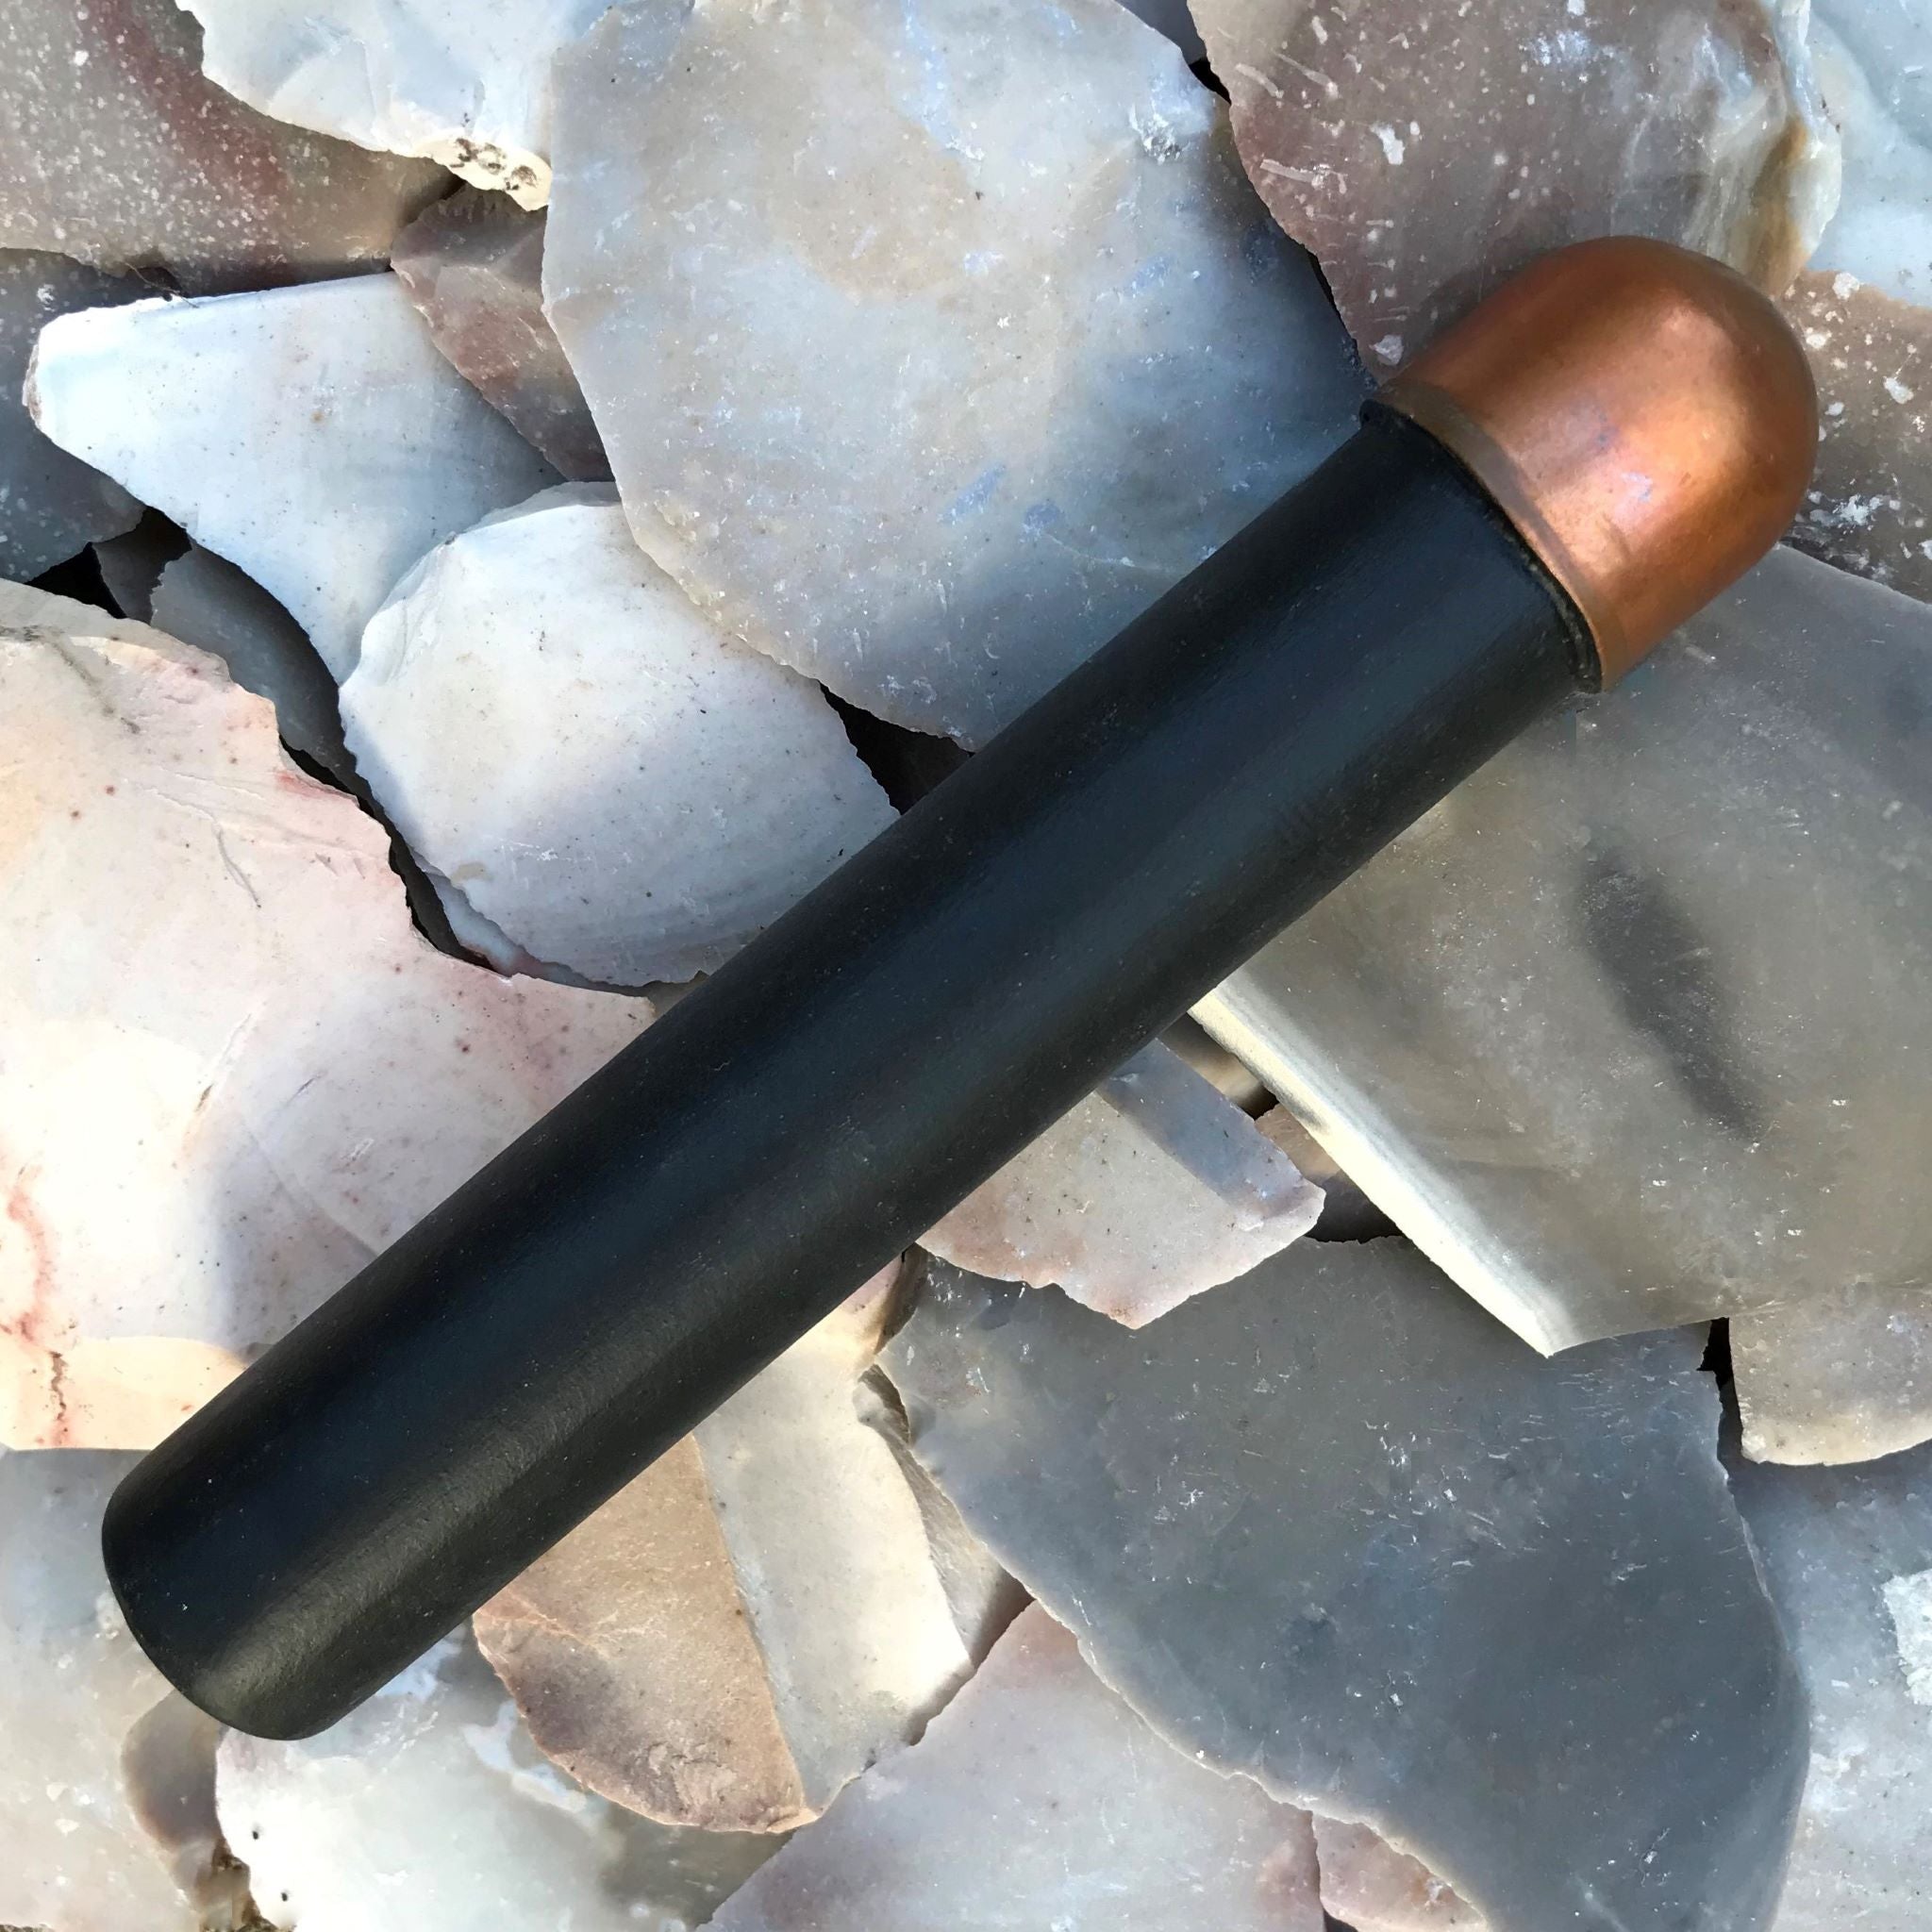 5 Piece Solid Head Copper Bopper Set - Billets, Flint knapping tools,  arrowhead